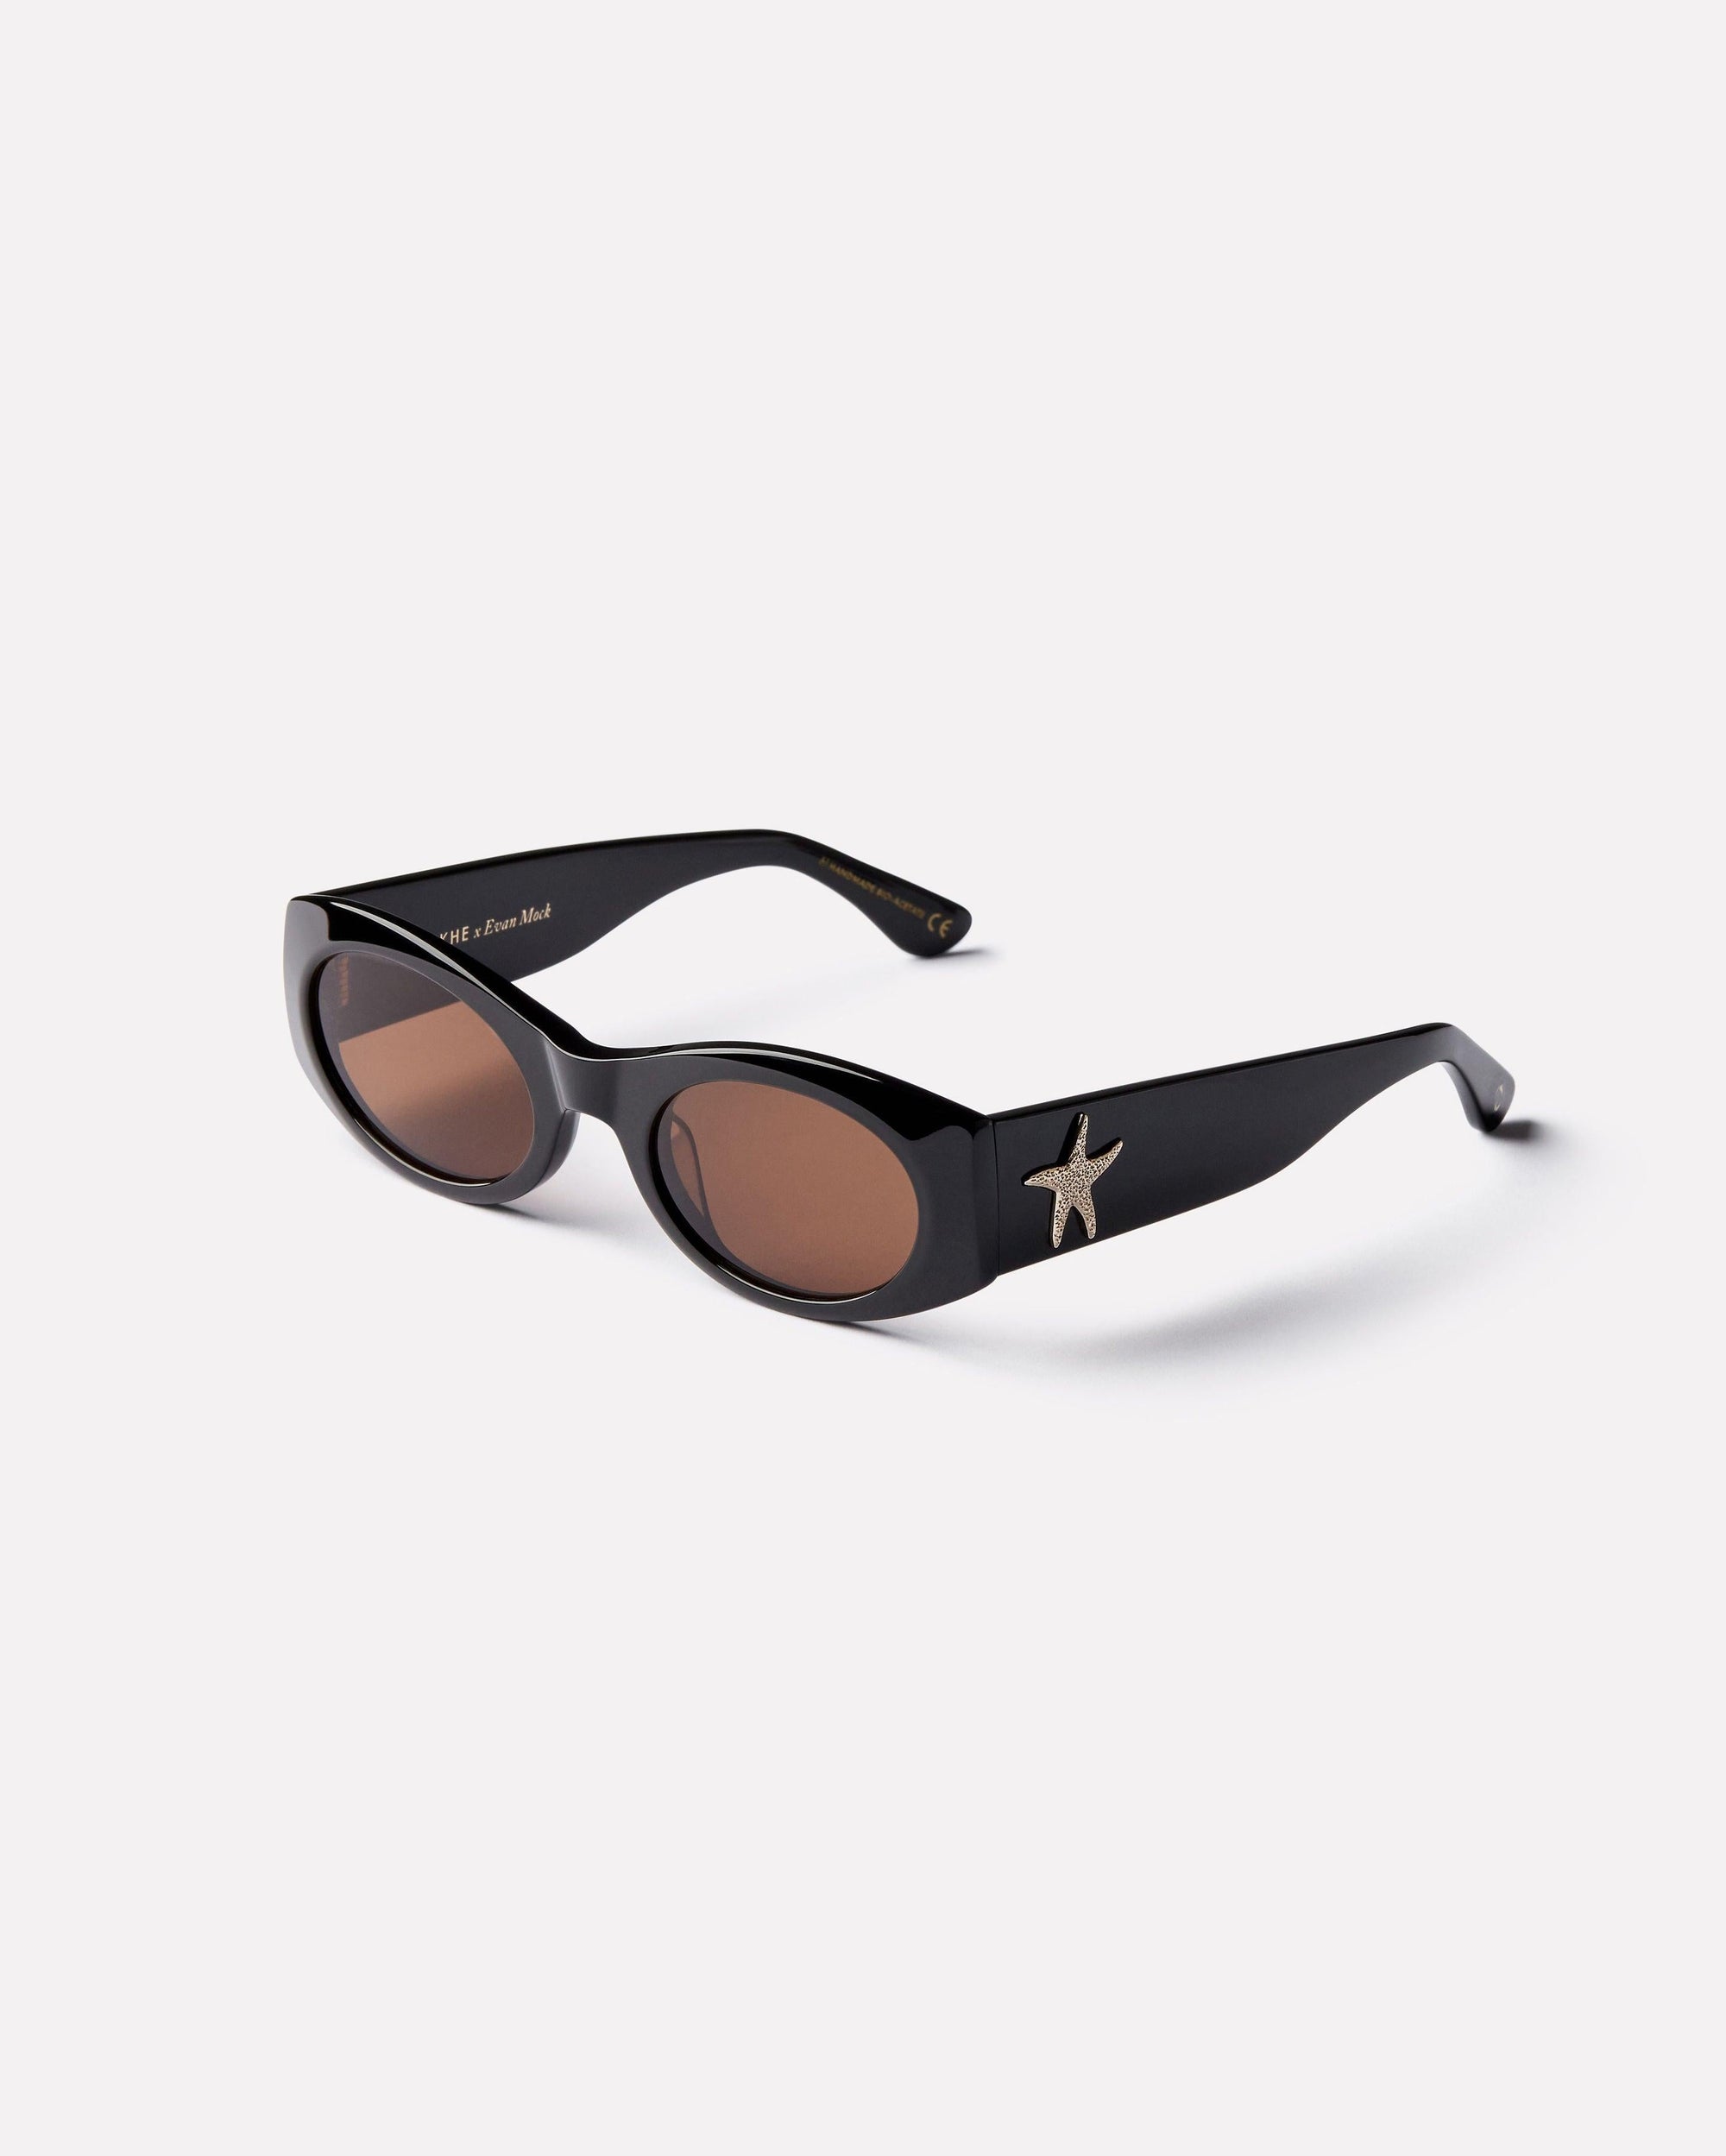 Epokhe Suede Sunglasses Black Polished / Bronze Amber